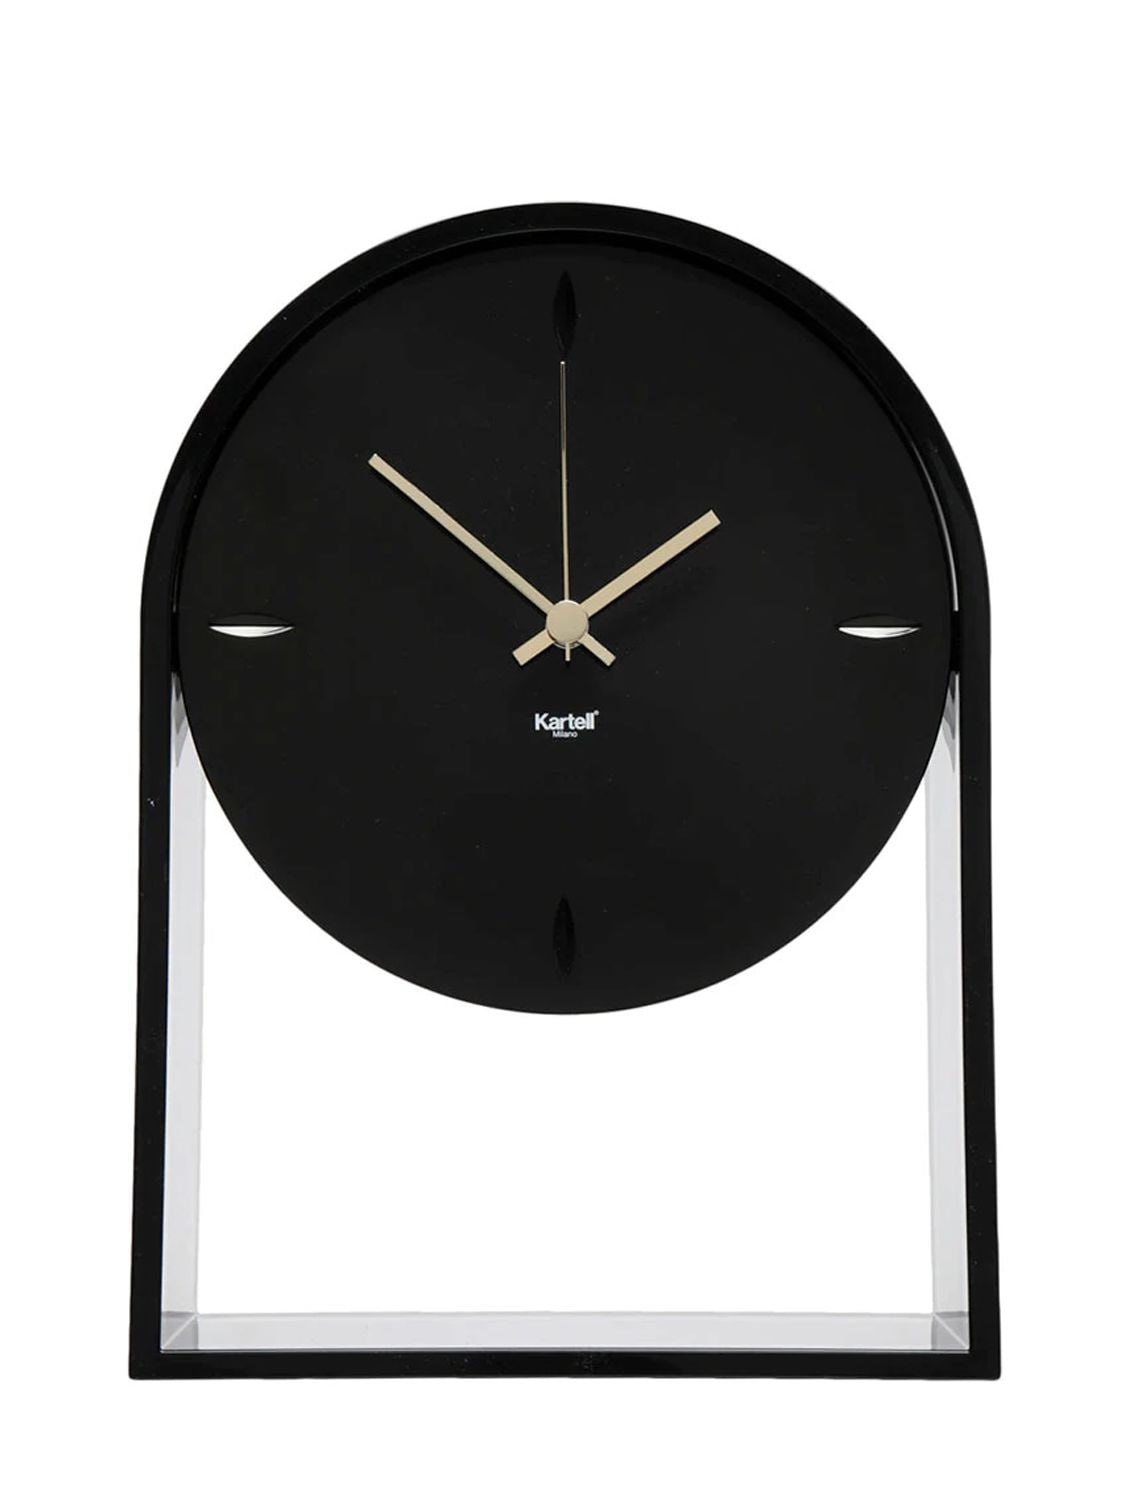 Kartell Air Du Temps Clock In Black